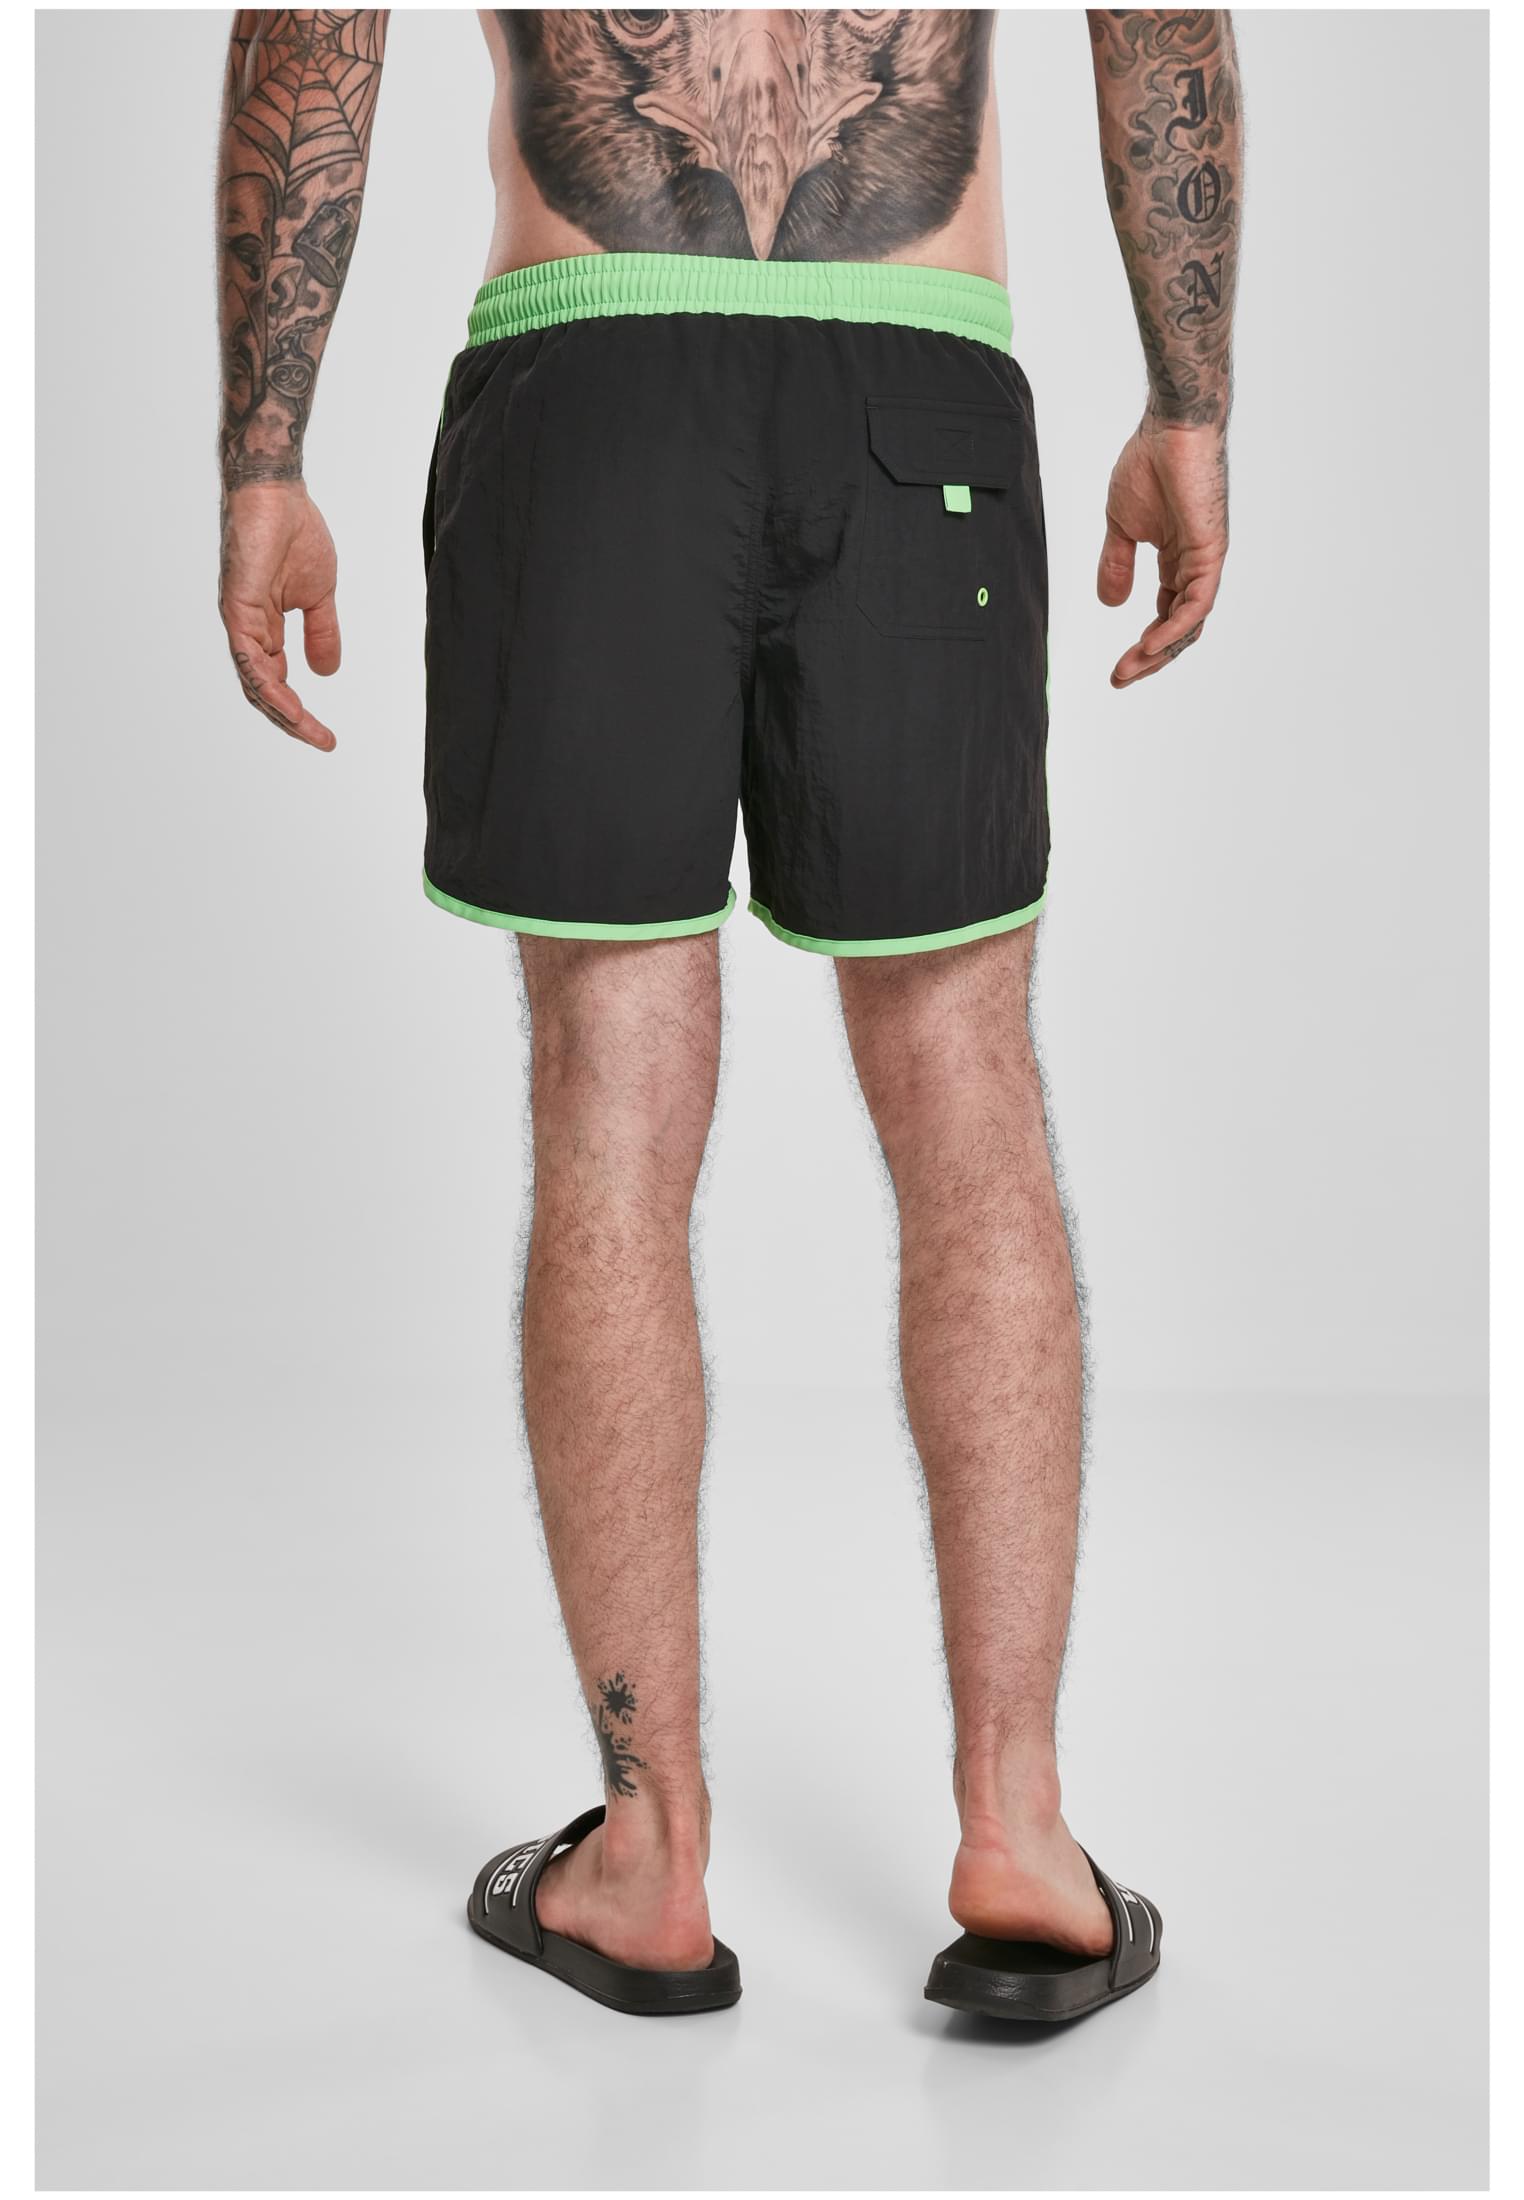 Plus Size Retro Swimshorts in Farbe blk/neongreen